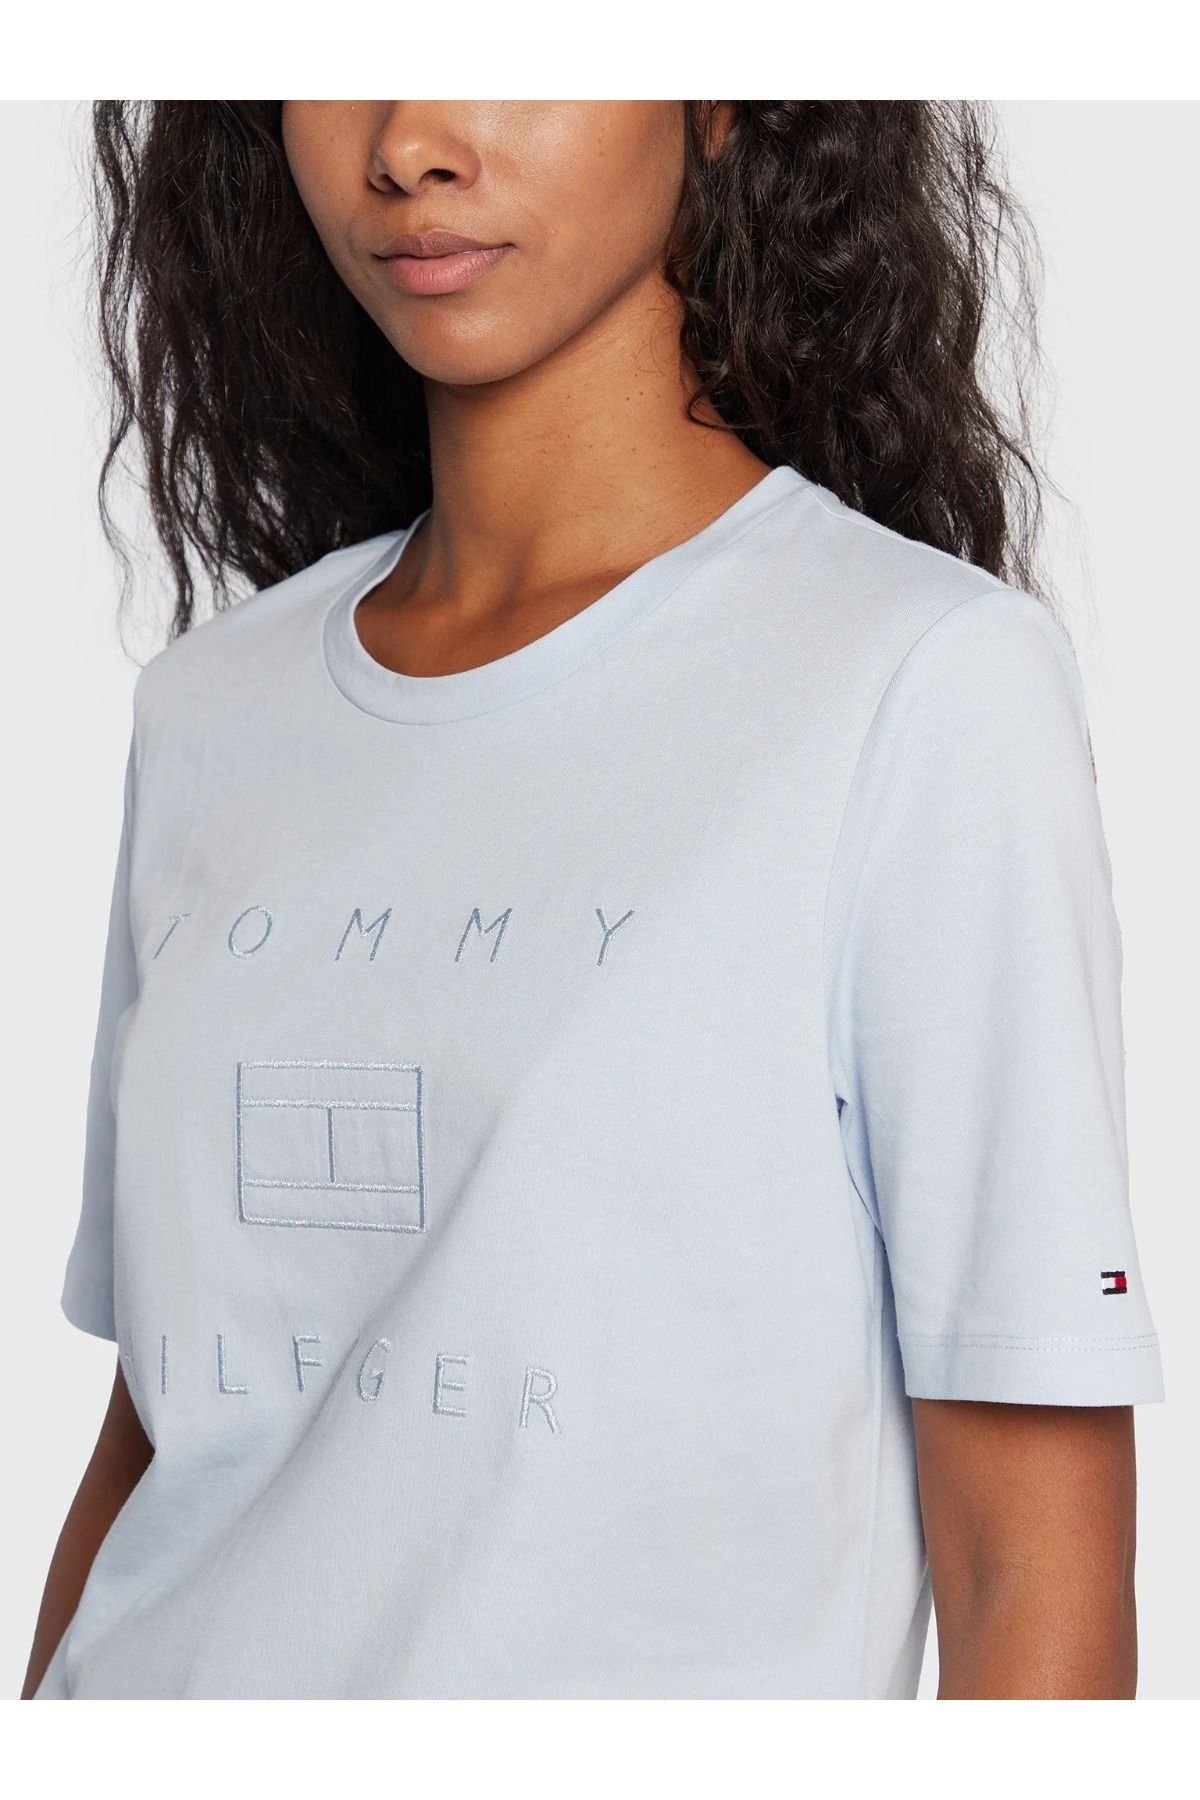 Tommy Hilfiger T-Shirt Metallic WW0WW33522 Blue Regular Fit kadın t-shirt